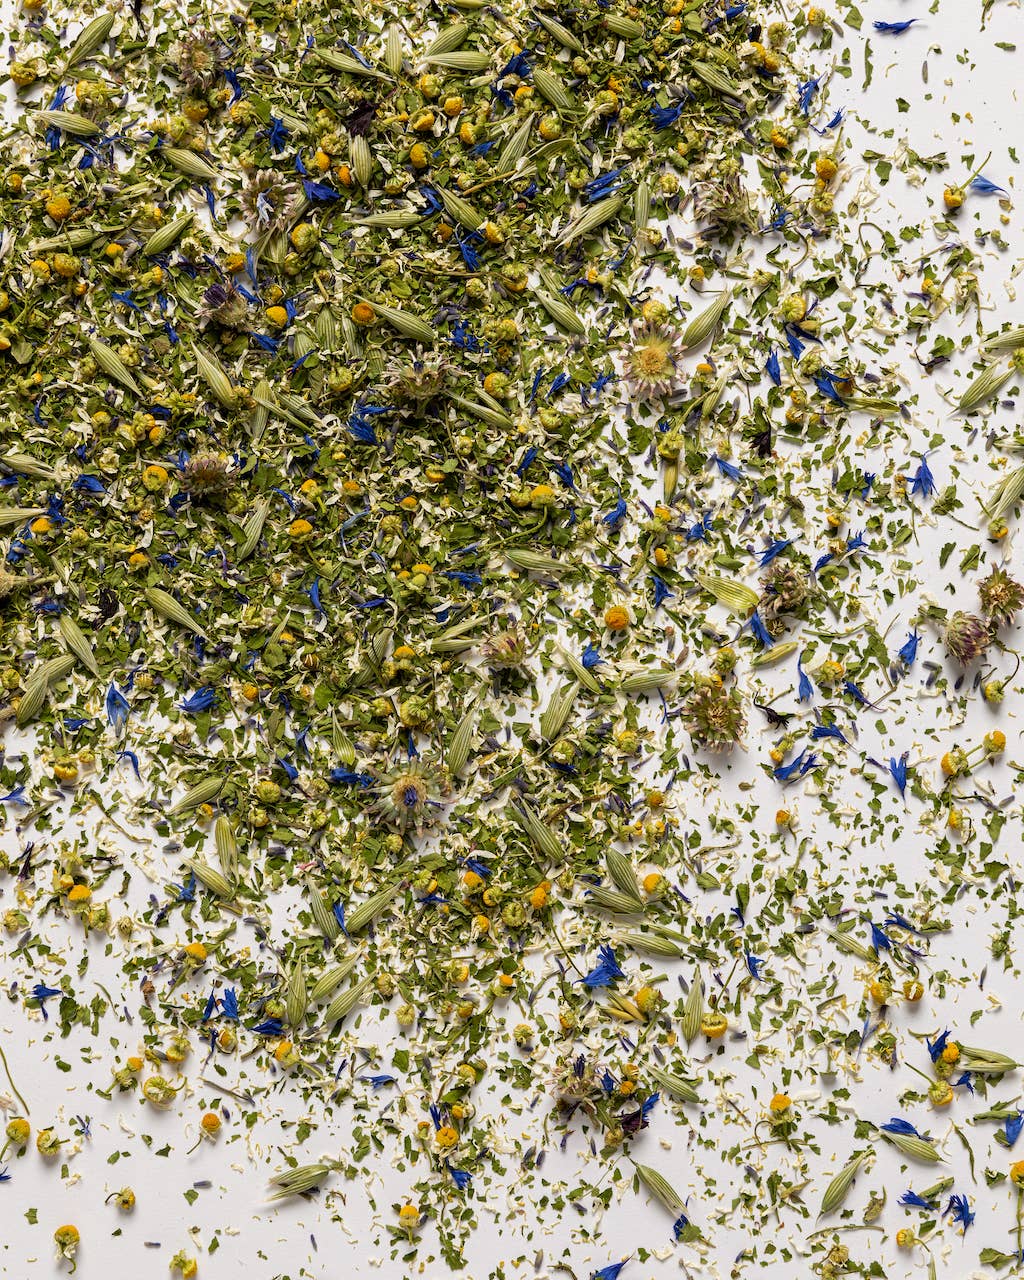 Stardust Tea - organic herbal tea for magical dreaming: Jar (25 g)